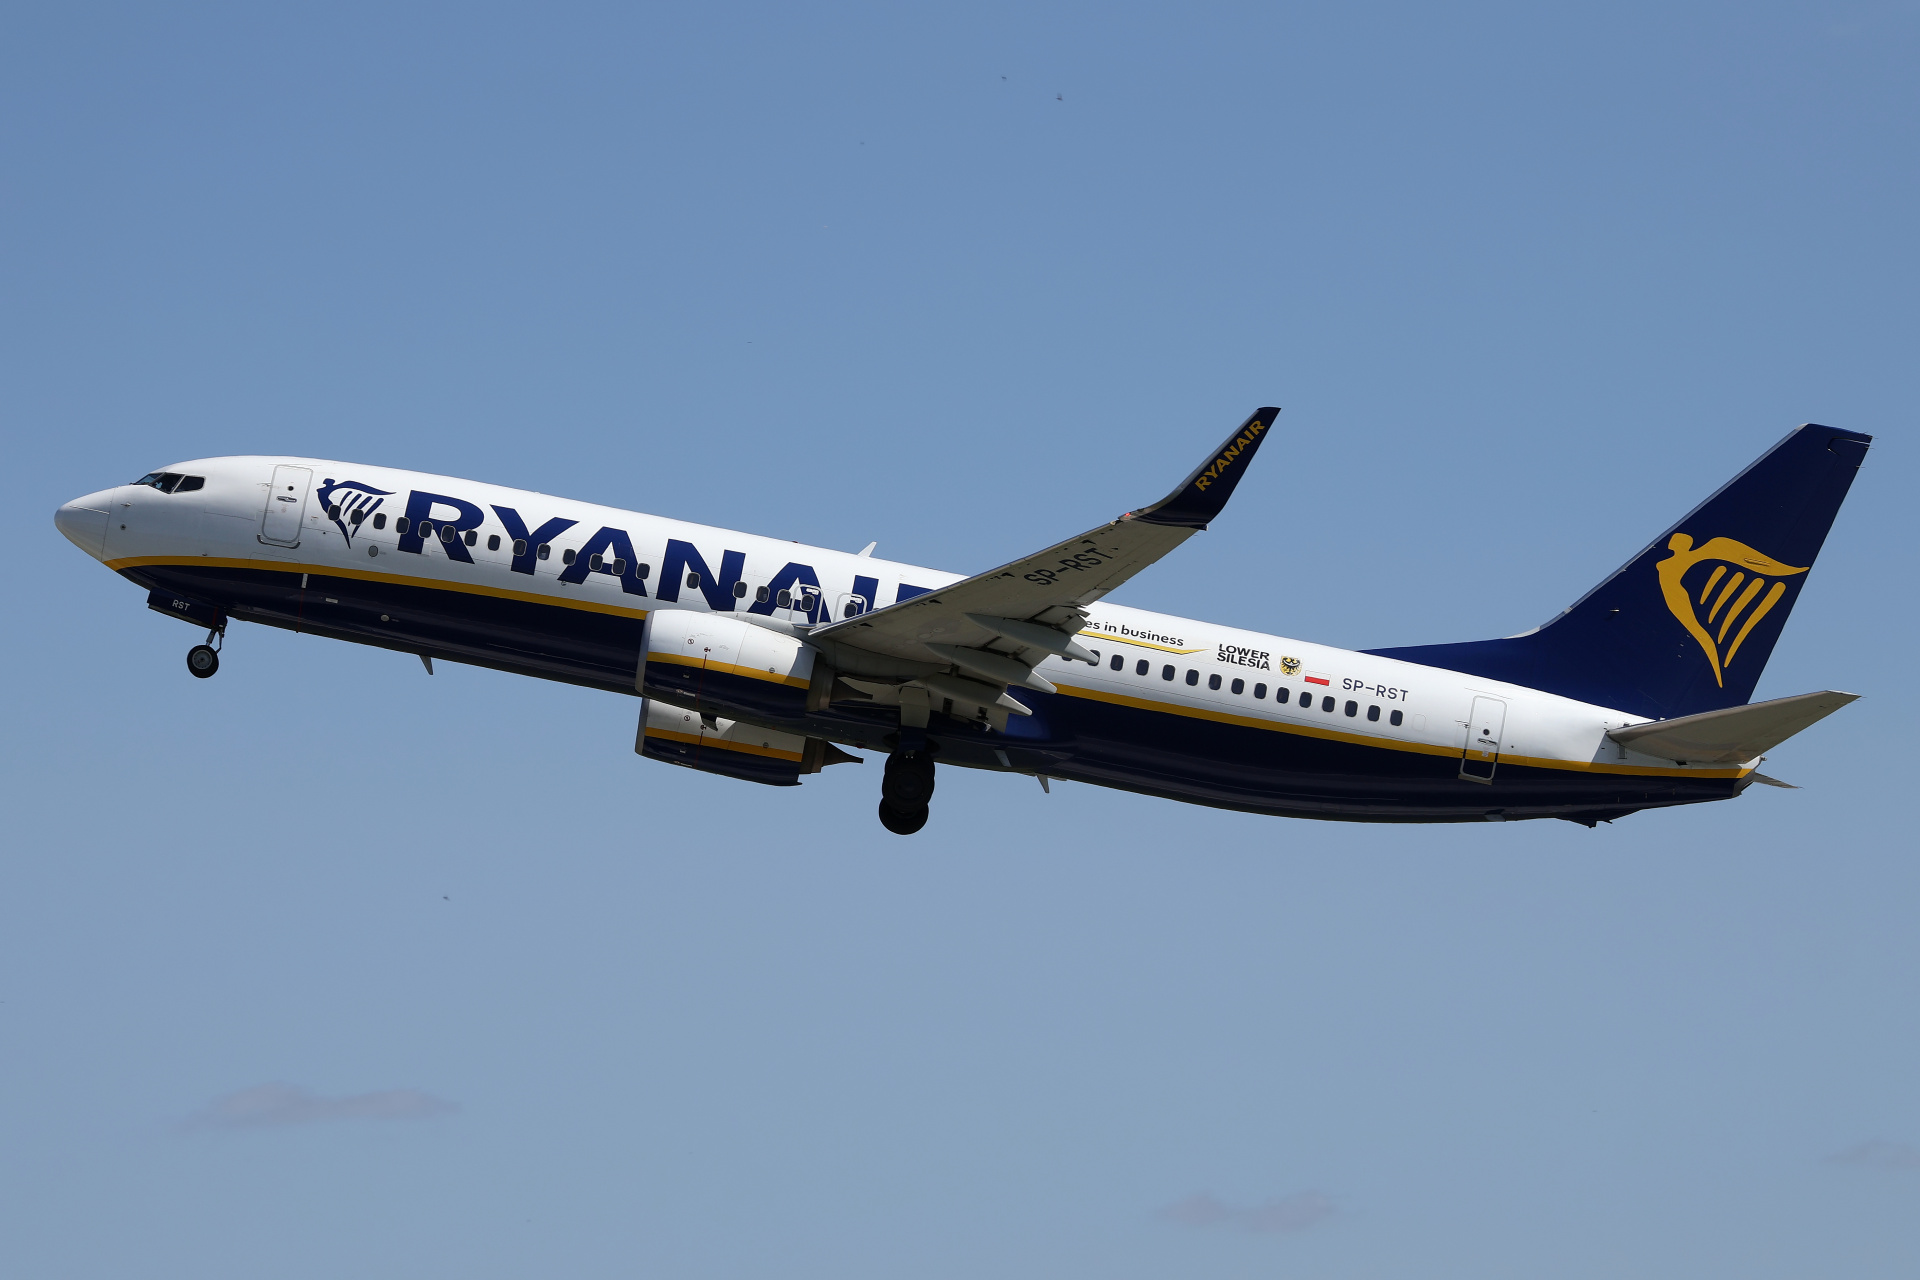 SP-RST, Ryanair Sun (Building Bridges in Business - Lower Silesia sticker) (Aircraft » EPWA Spotting » Boeing 737-800 » Ryanair)